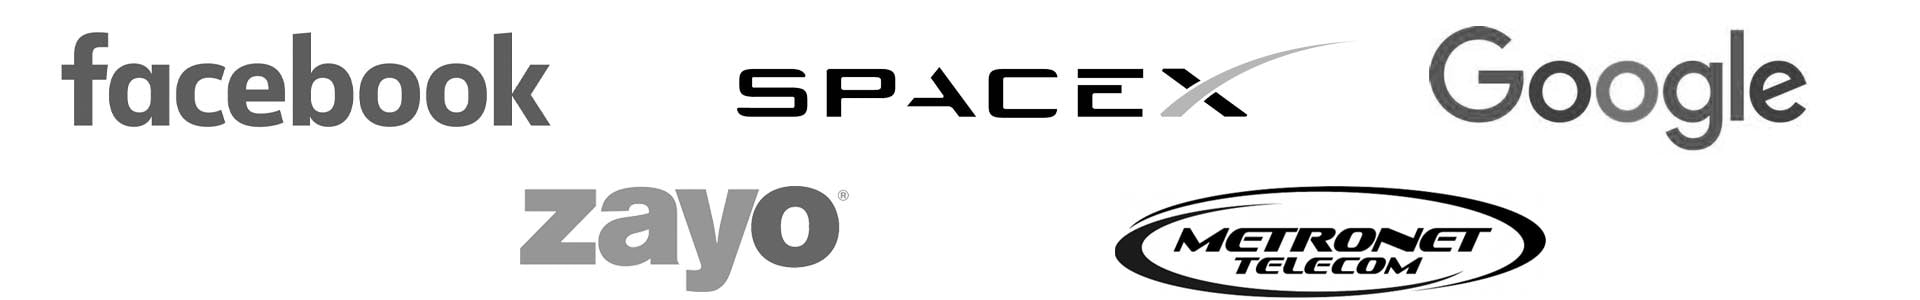 Logos of Facebook, Space-X, Google, Zayo, and Metronet